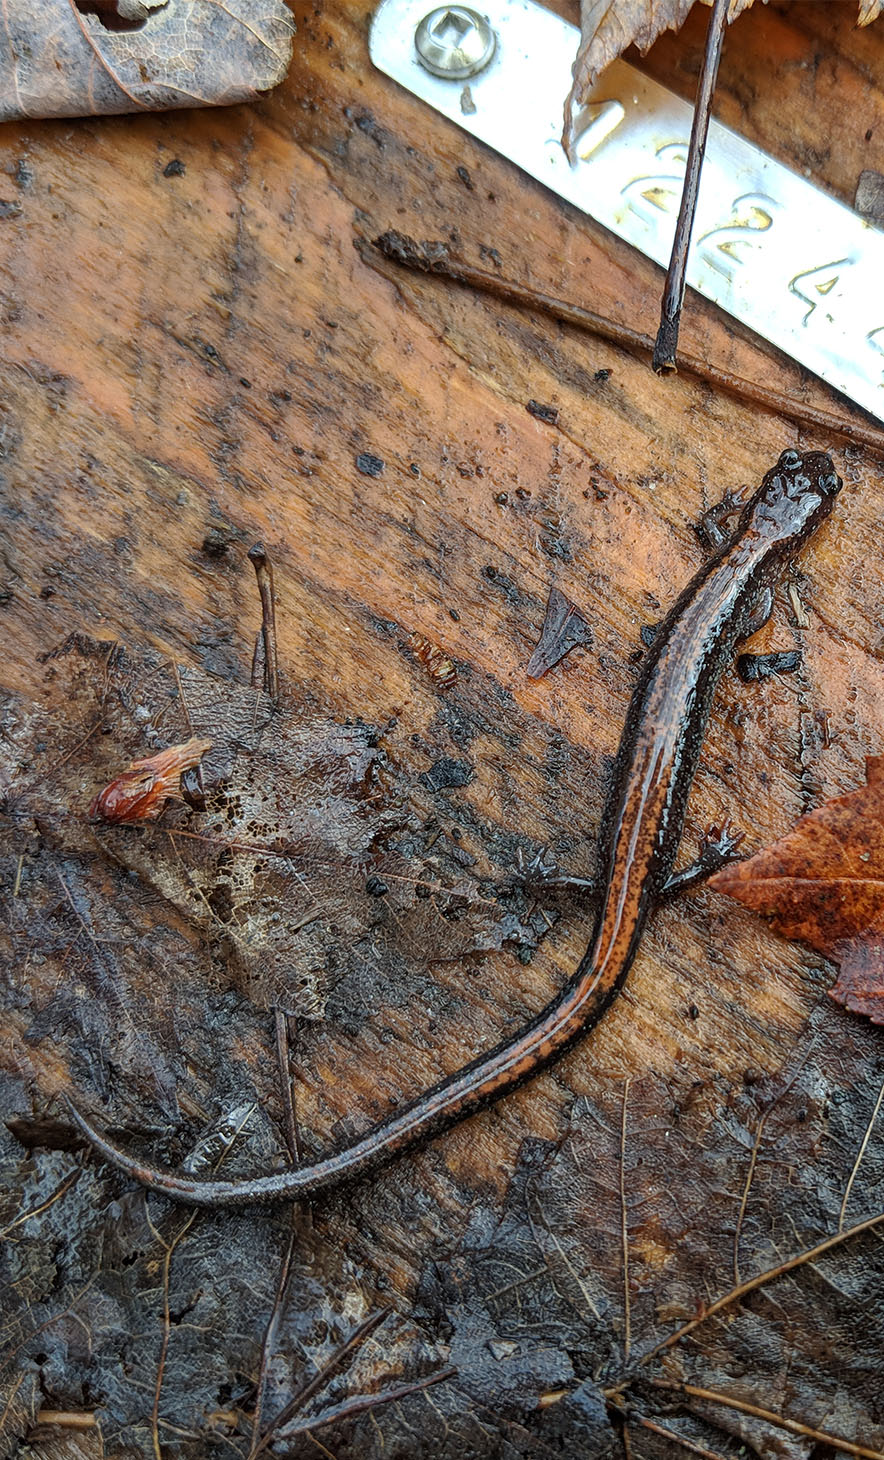 Eastern Red-backed Salamander on board